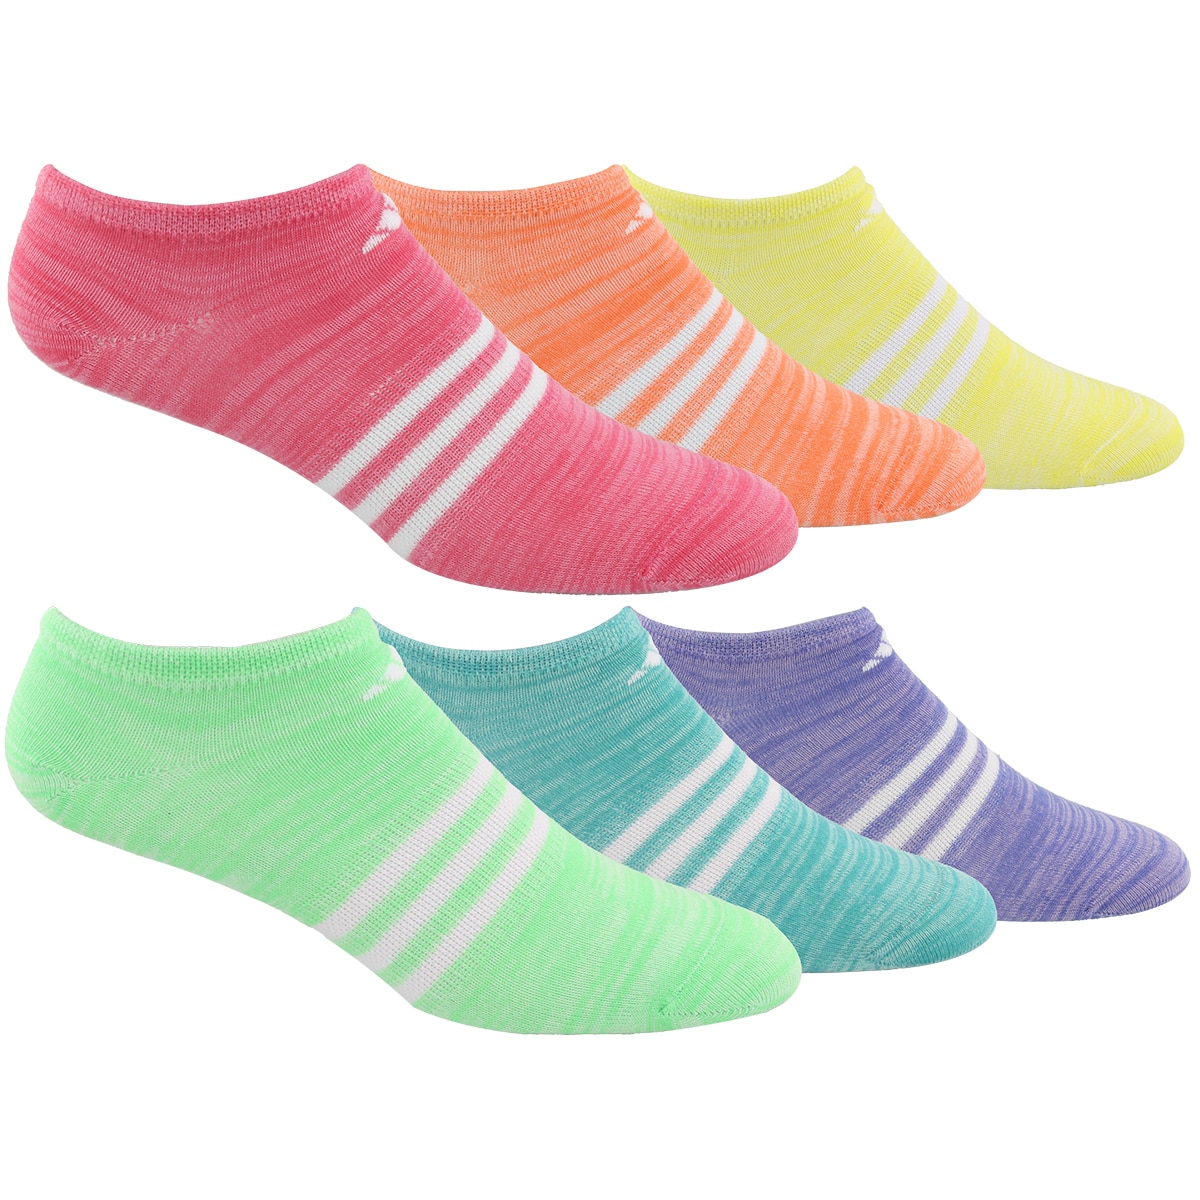 Adidas youth socks - Rainbow